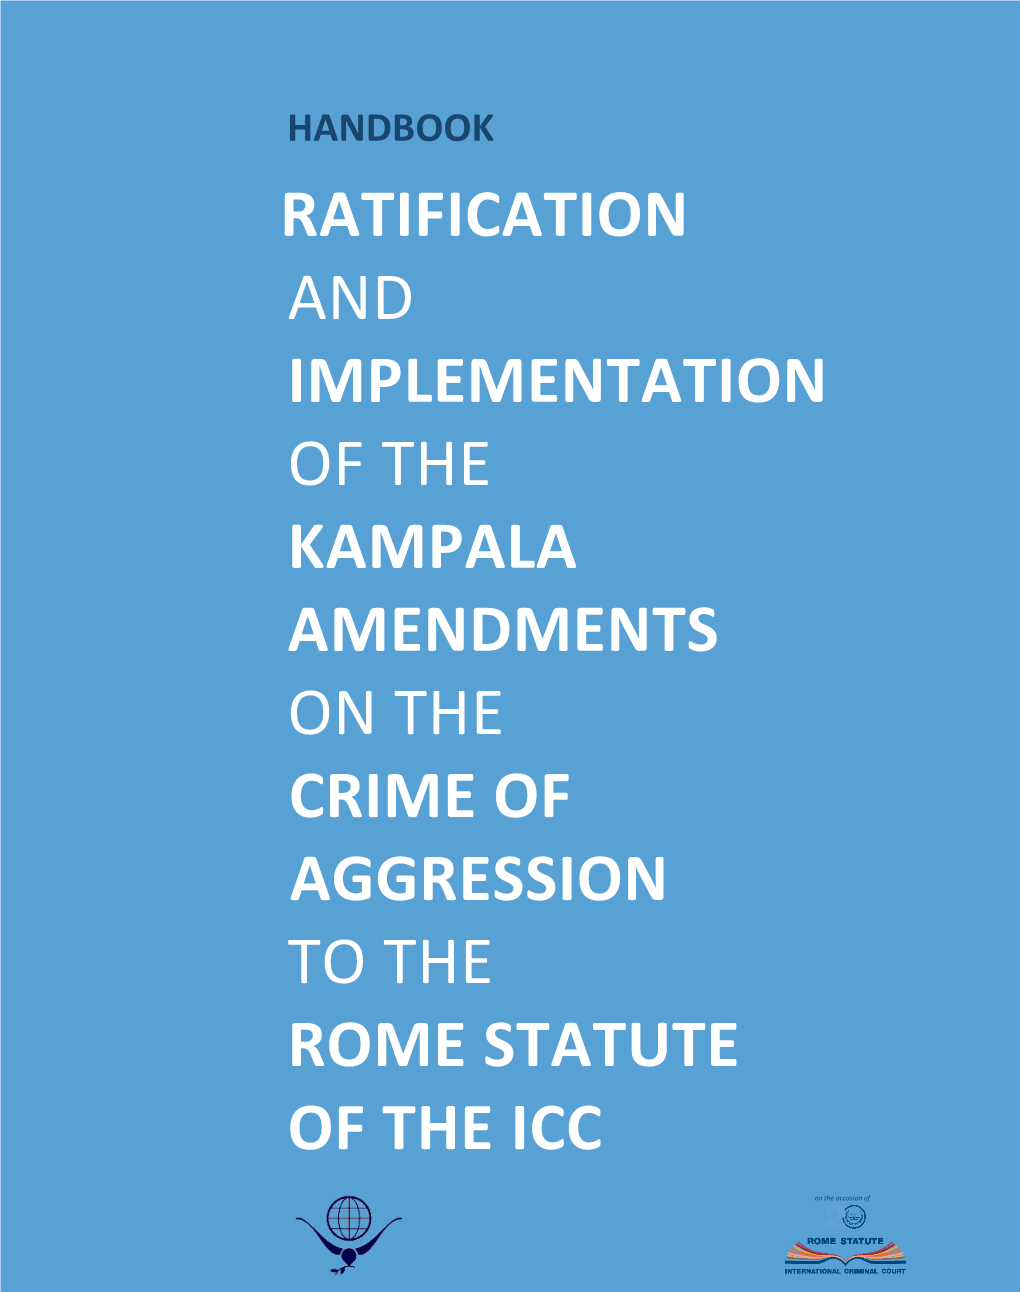 Handbook on the Ratification and Implementation of Kampala Amendments